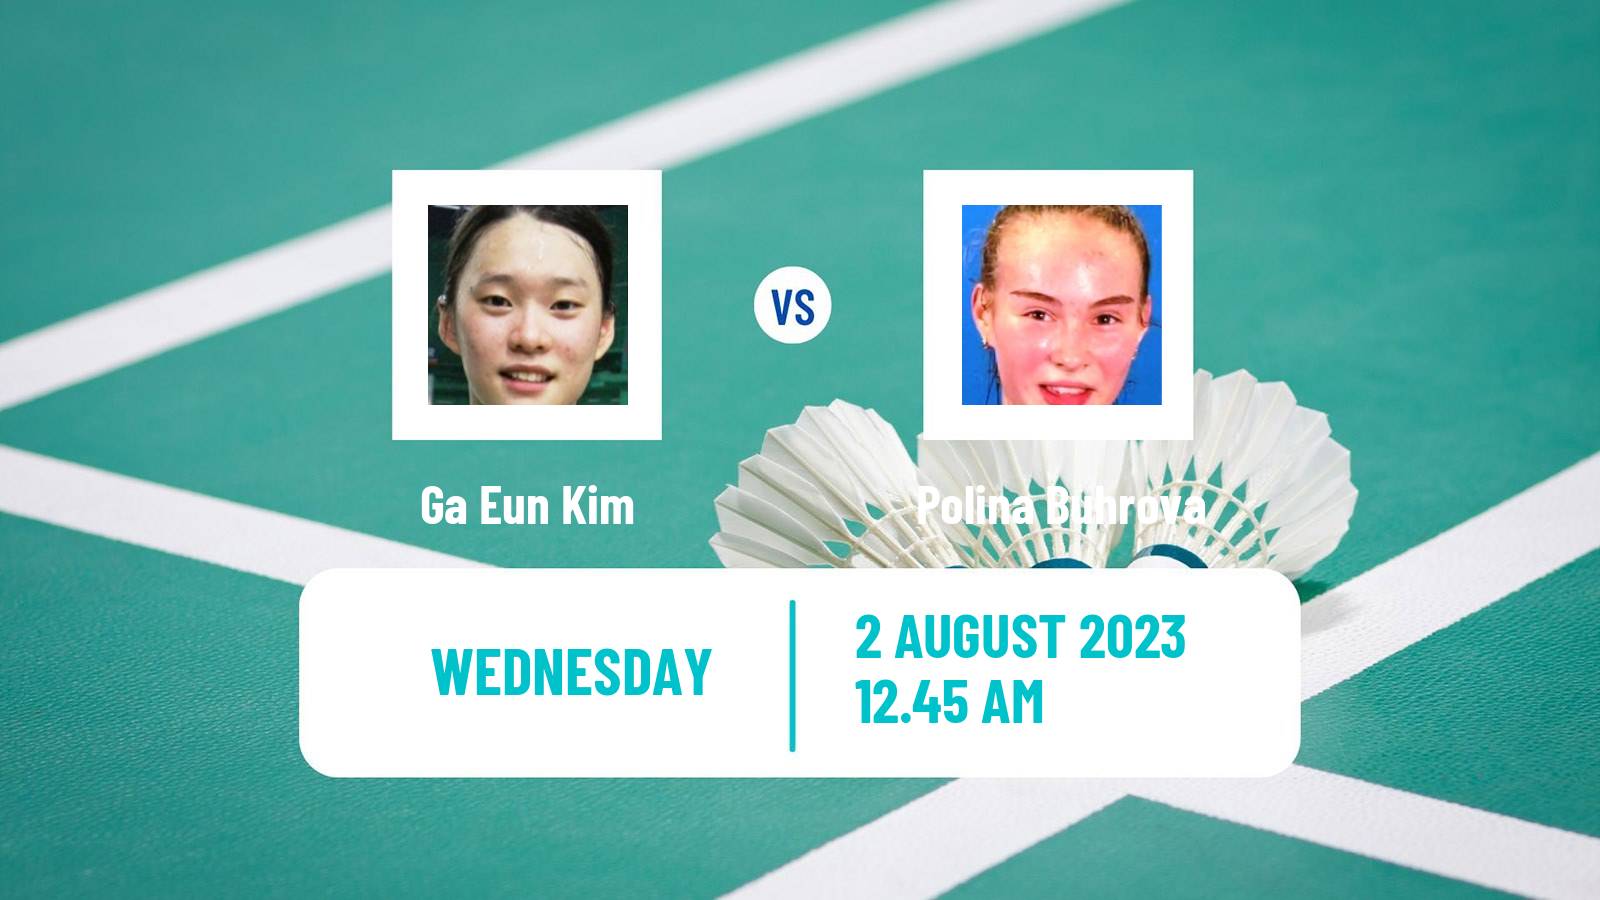 Badminton BWF World Tour Australian Open Women Ga Eun Kim - Polina Buhrova